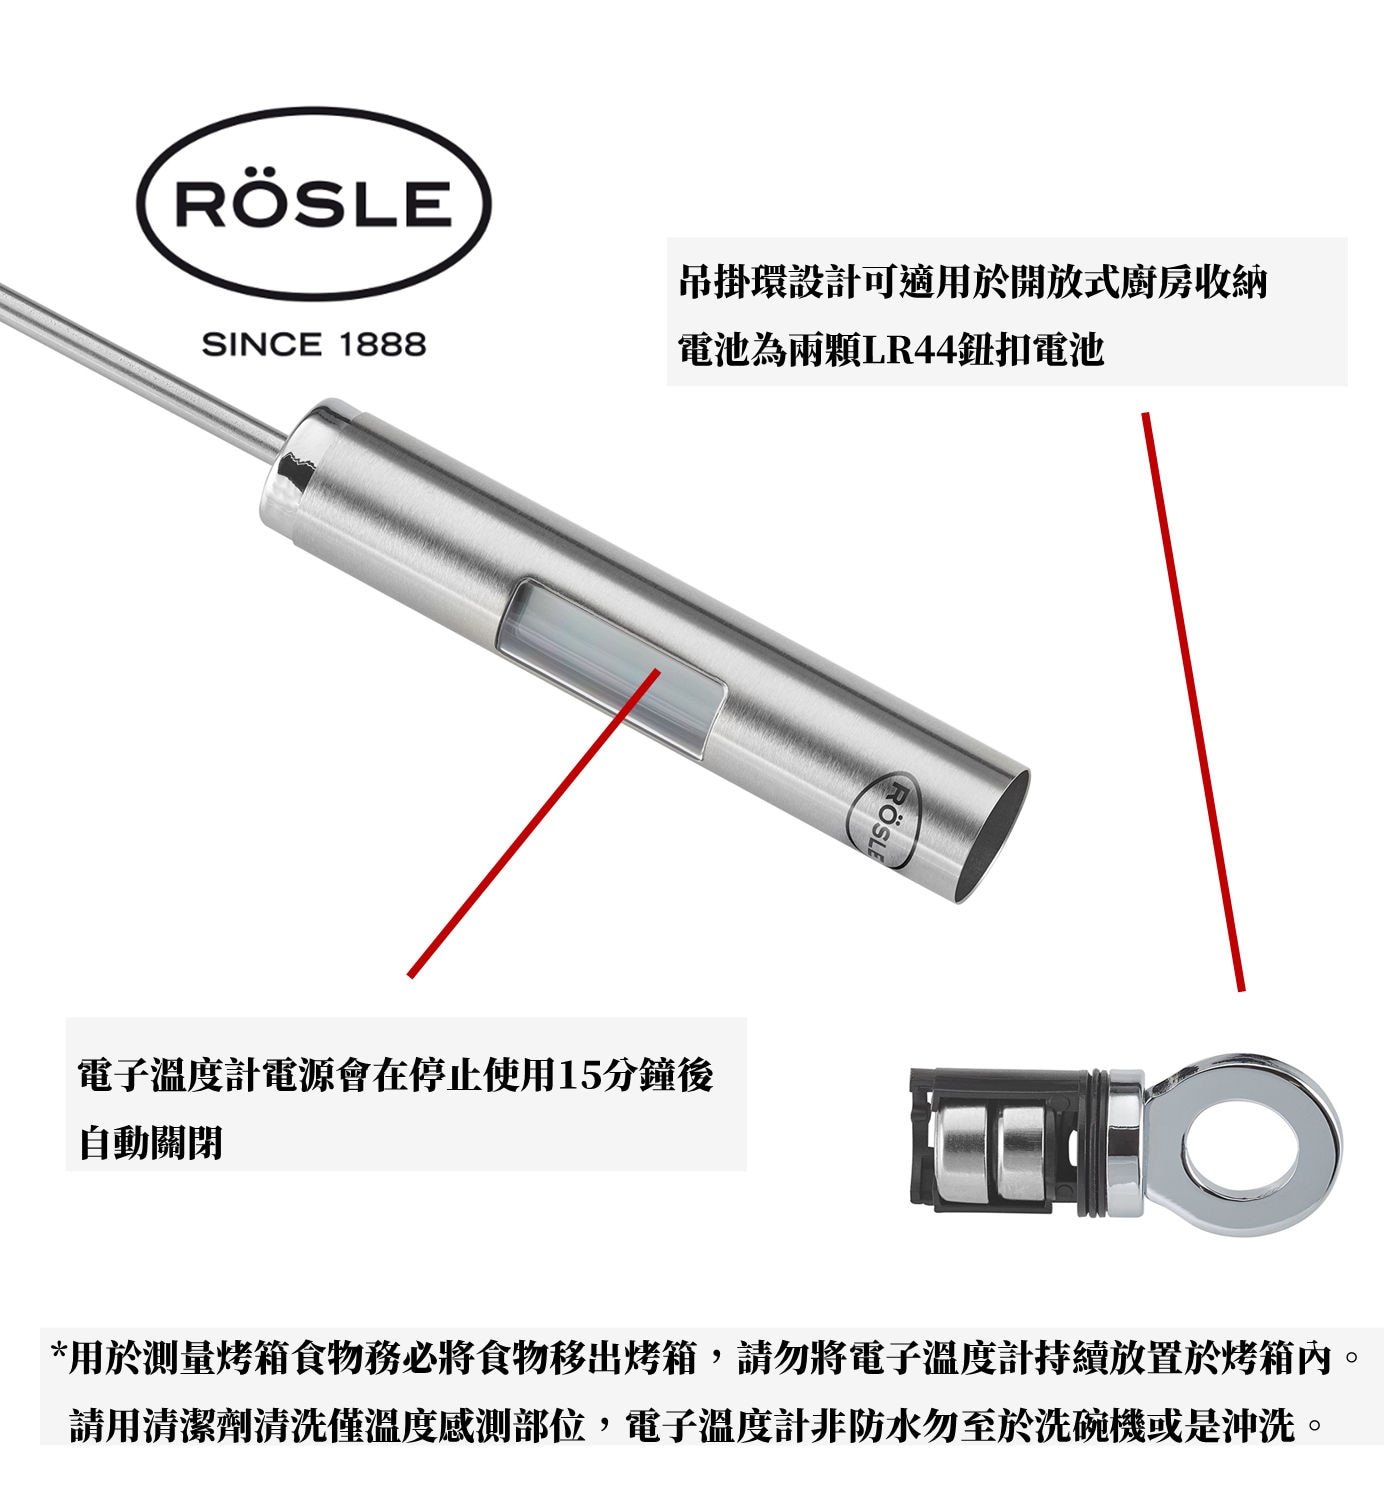 Rosle針式溫度計吊掛環設計可適用於開放式廚房收納.電池為兩顆LR44鈕扣電池.電子溫度計電源會在停止使用15分鐘後自動關閉